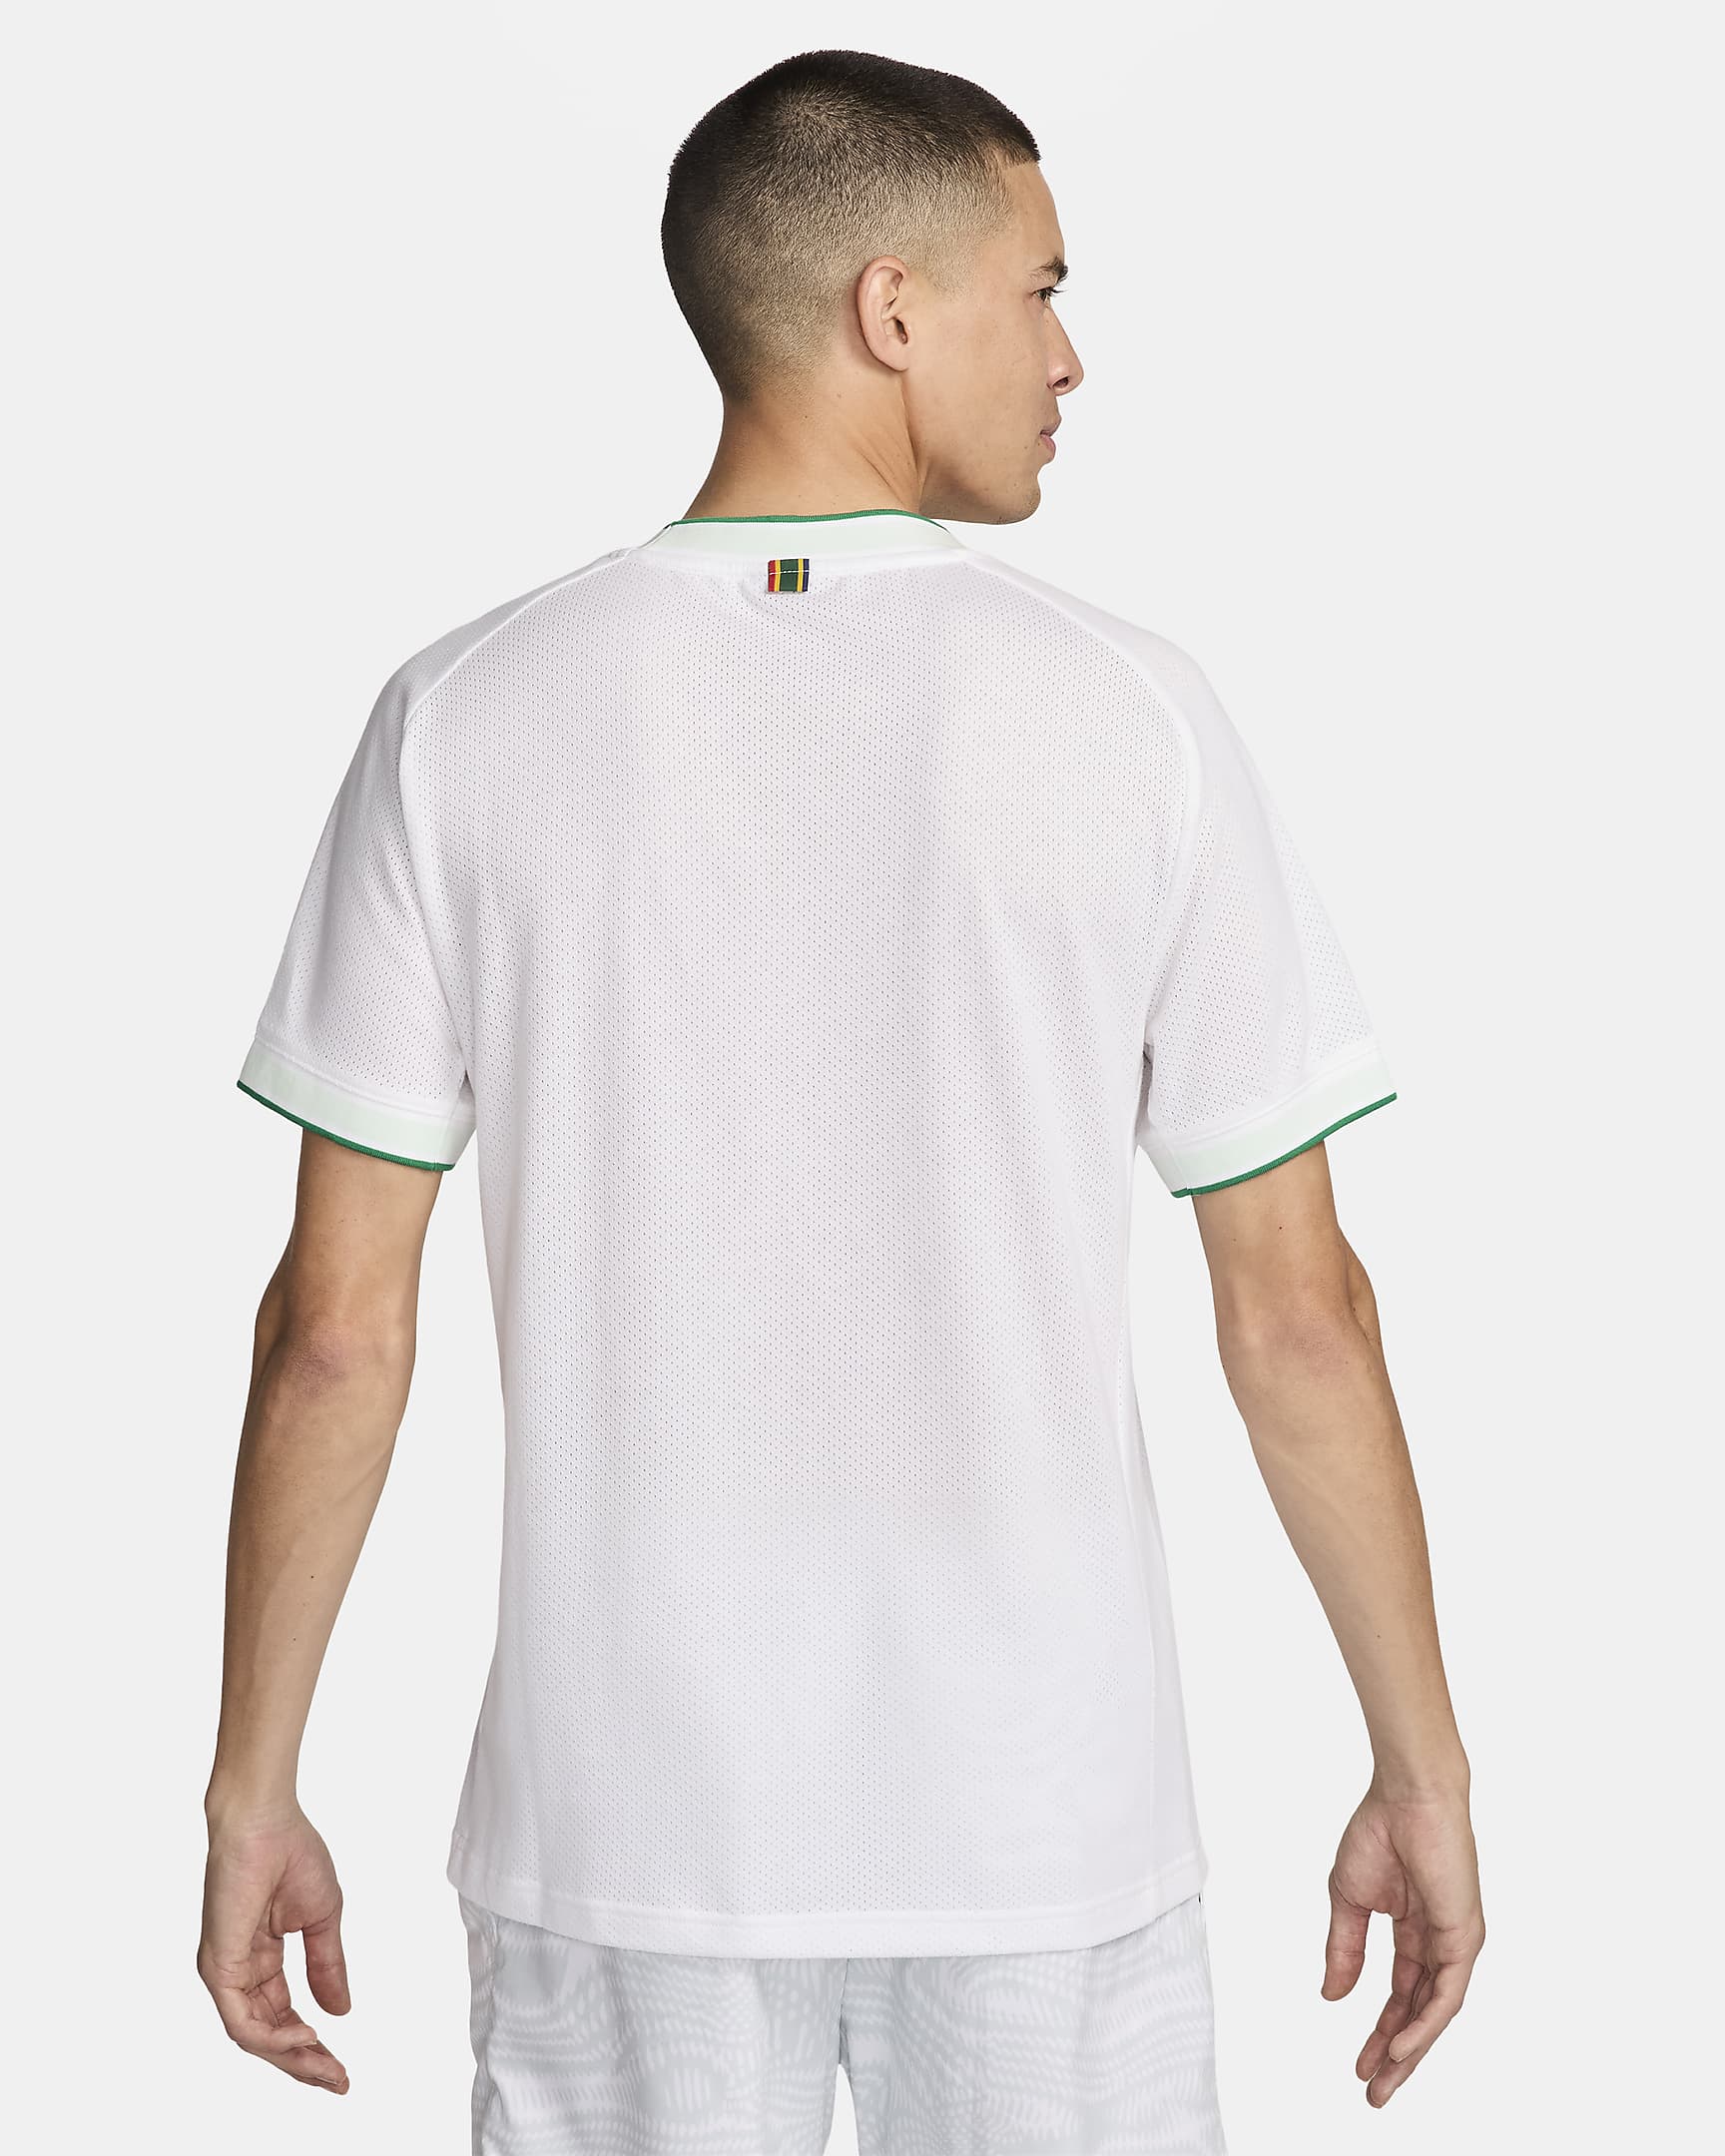 NikeCourt Heritage Men's Short-Sleeve Tennis Top - White